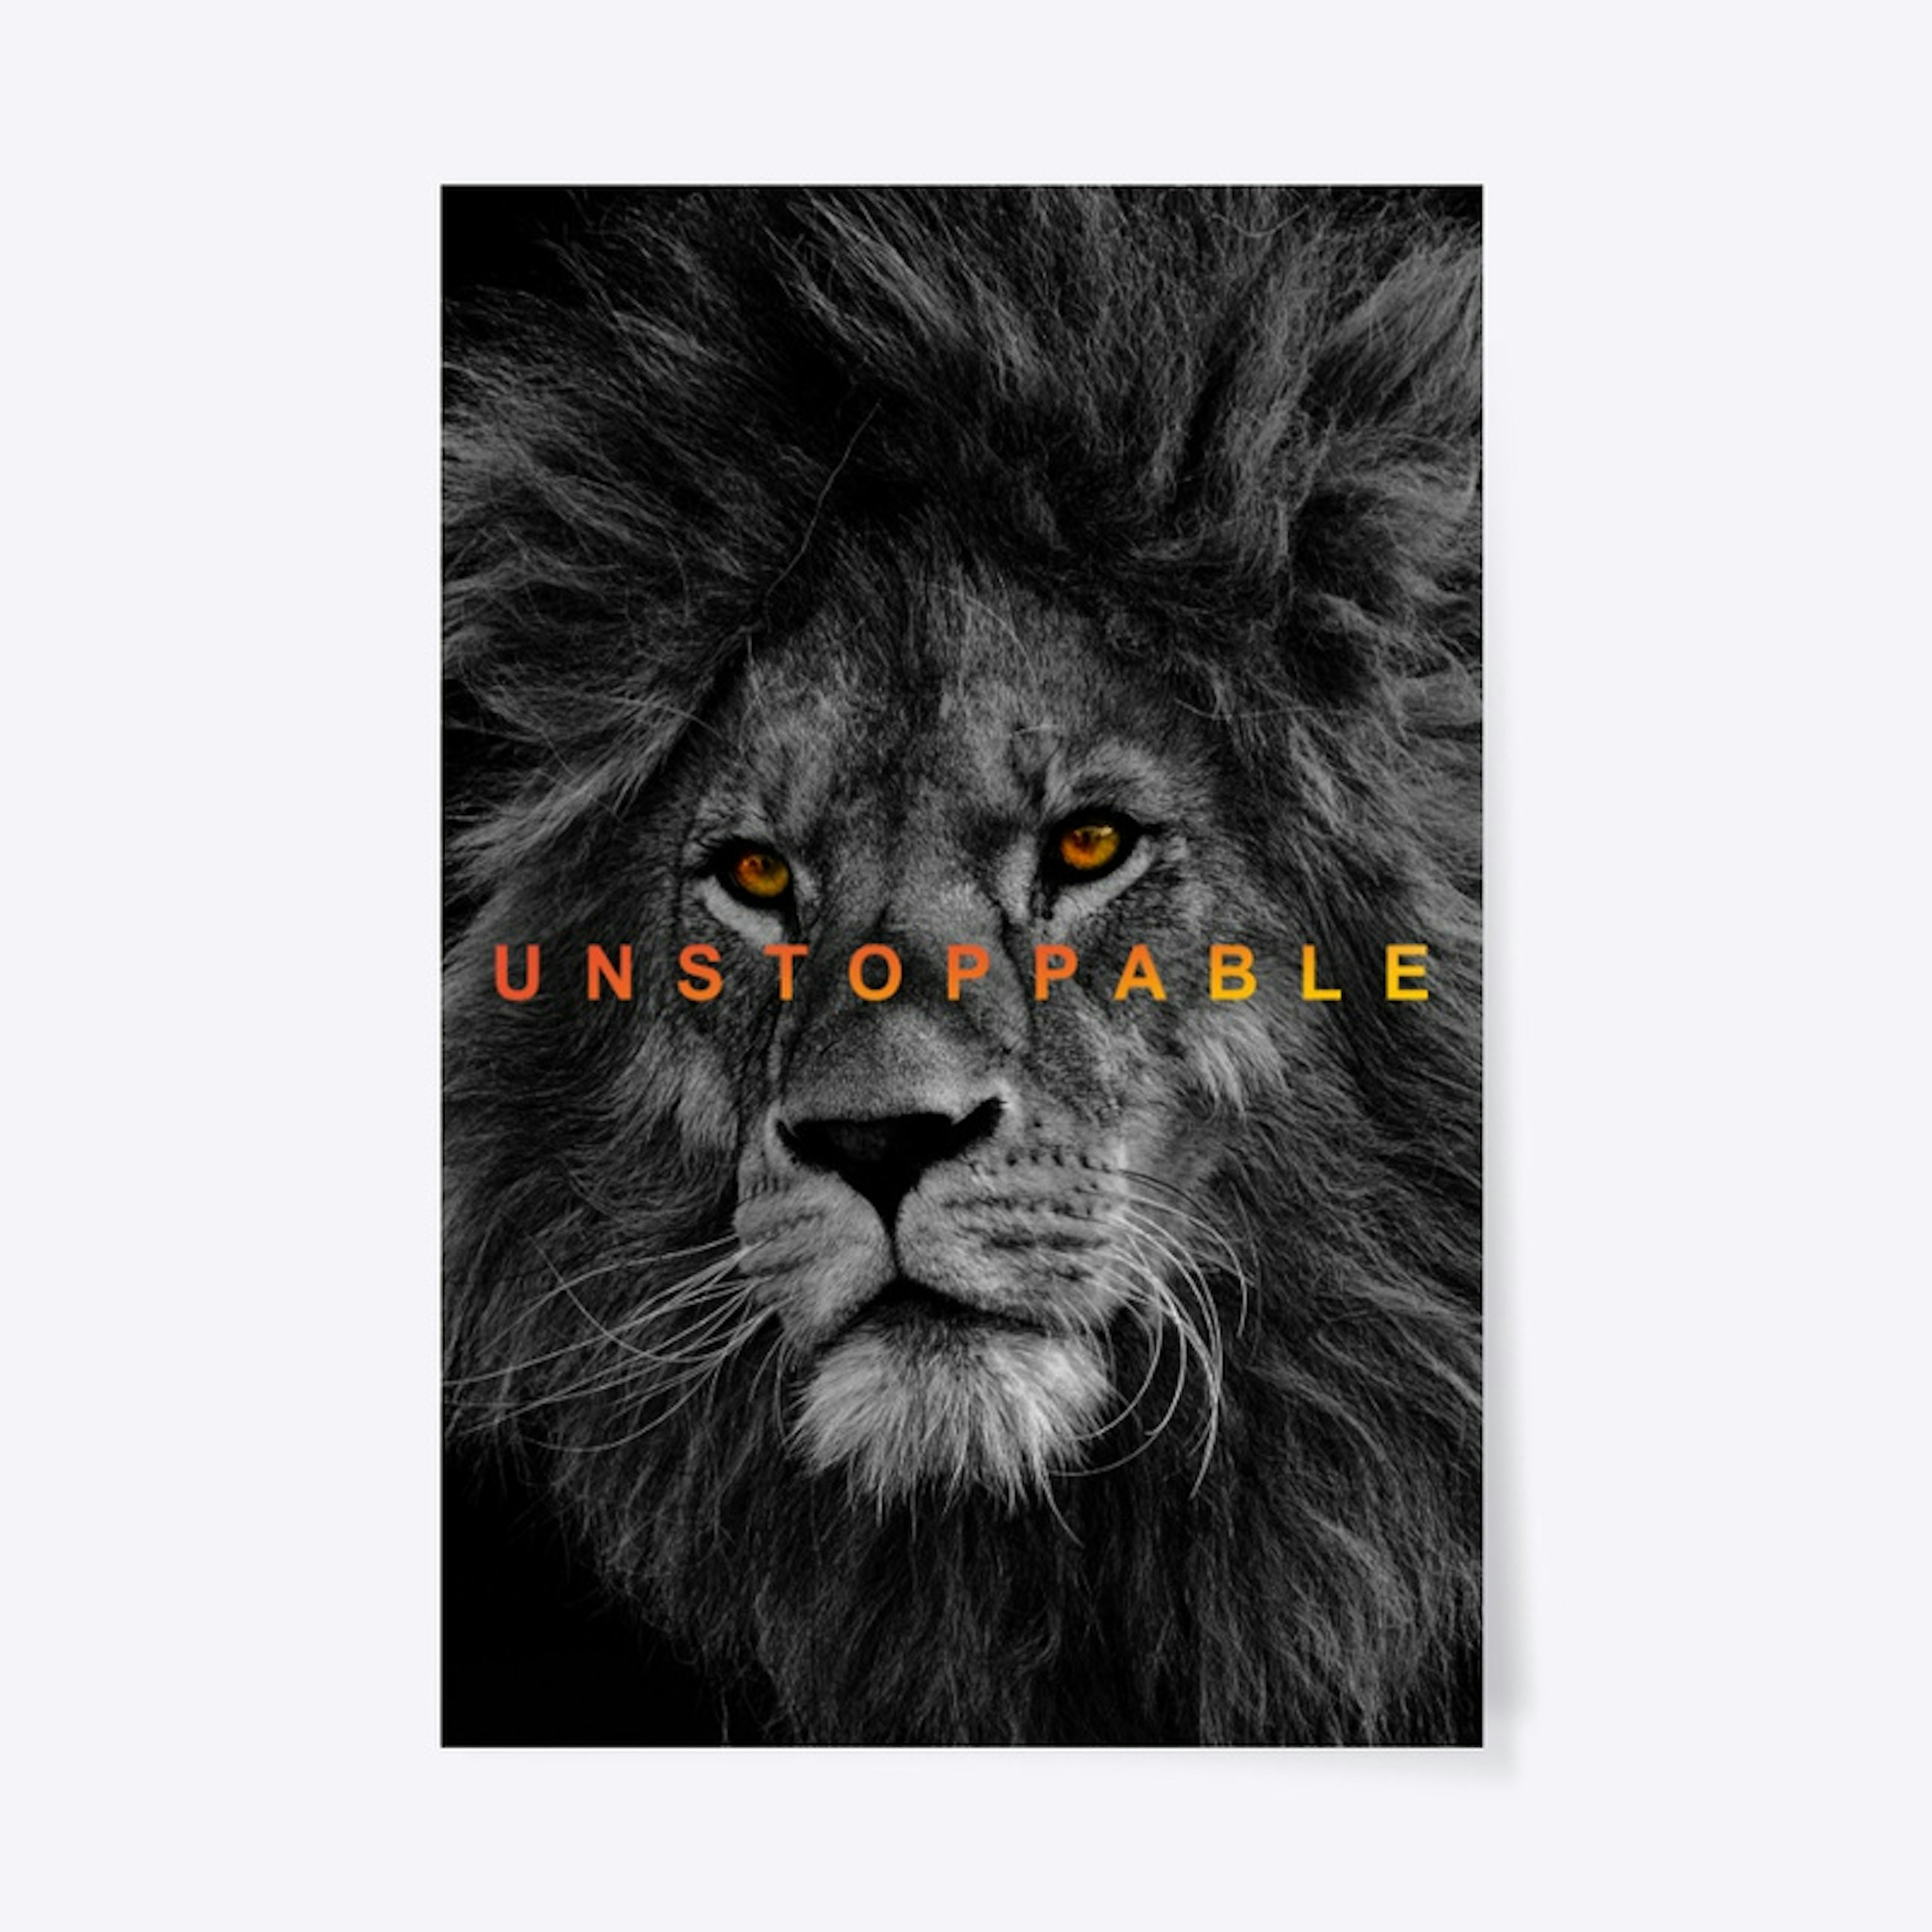 I am unstoppable - Motivational Poster